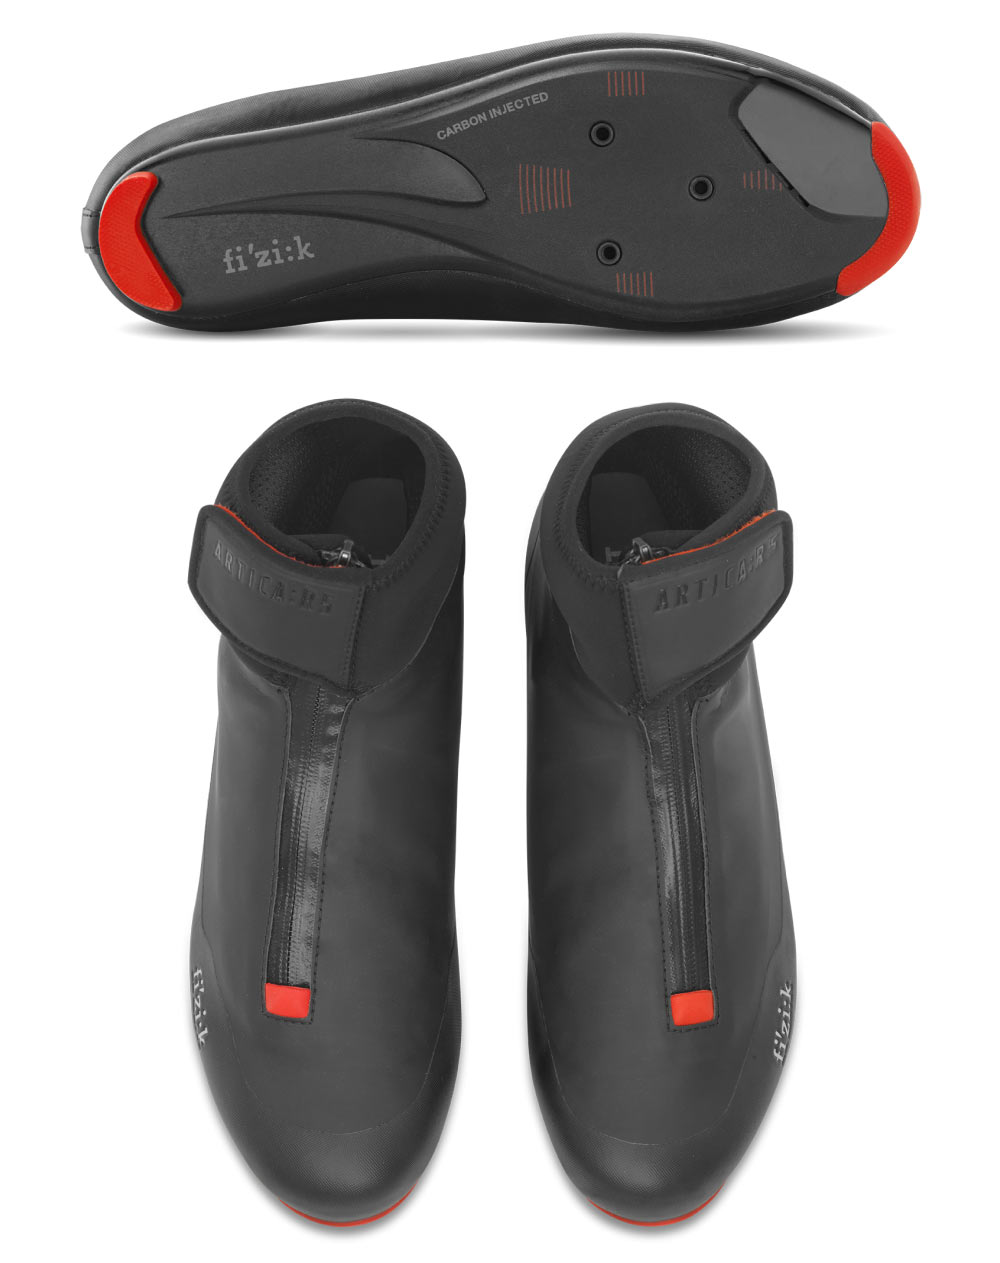 2018 Fizik Artica R5 road bike waterproof winter cycling shoes keep your feet dry and warm